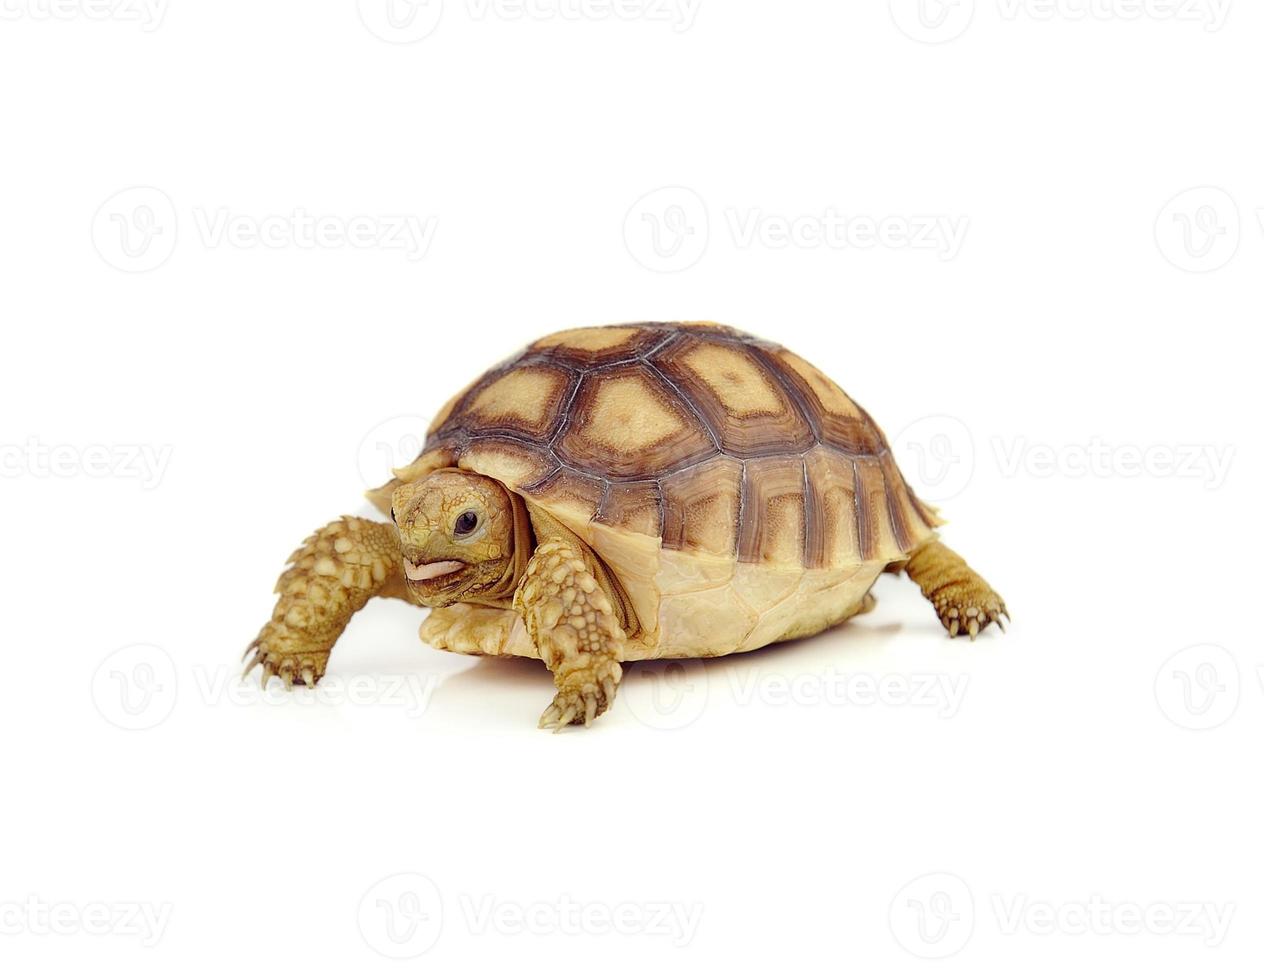 schildpad op over witte achtergrond foto